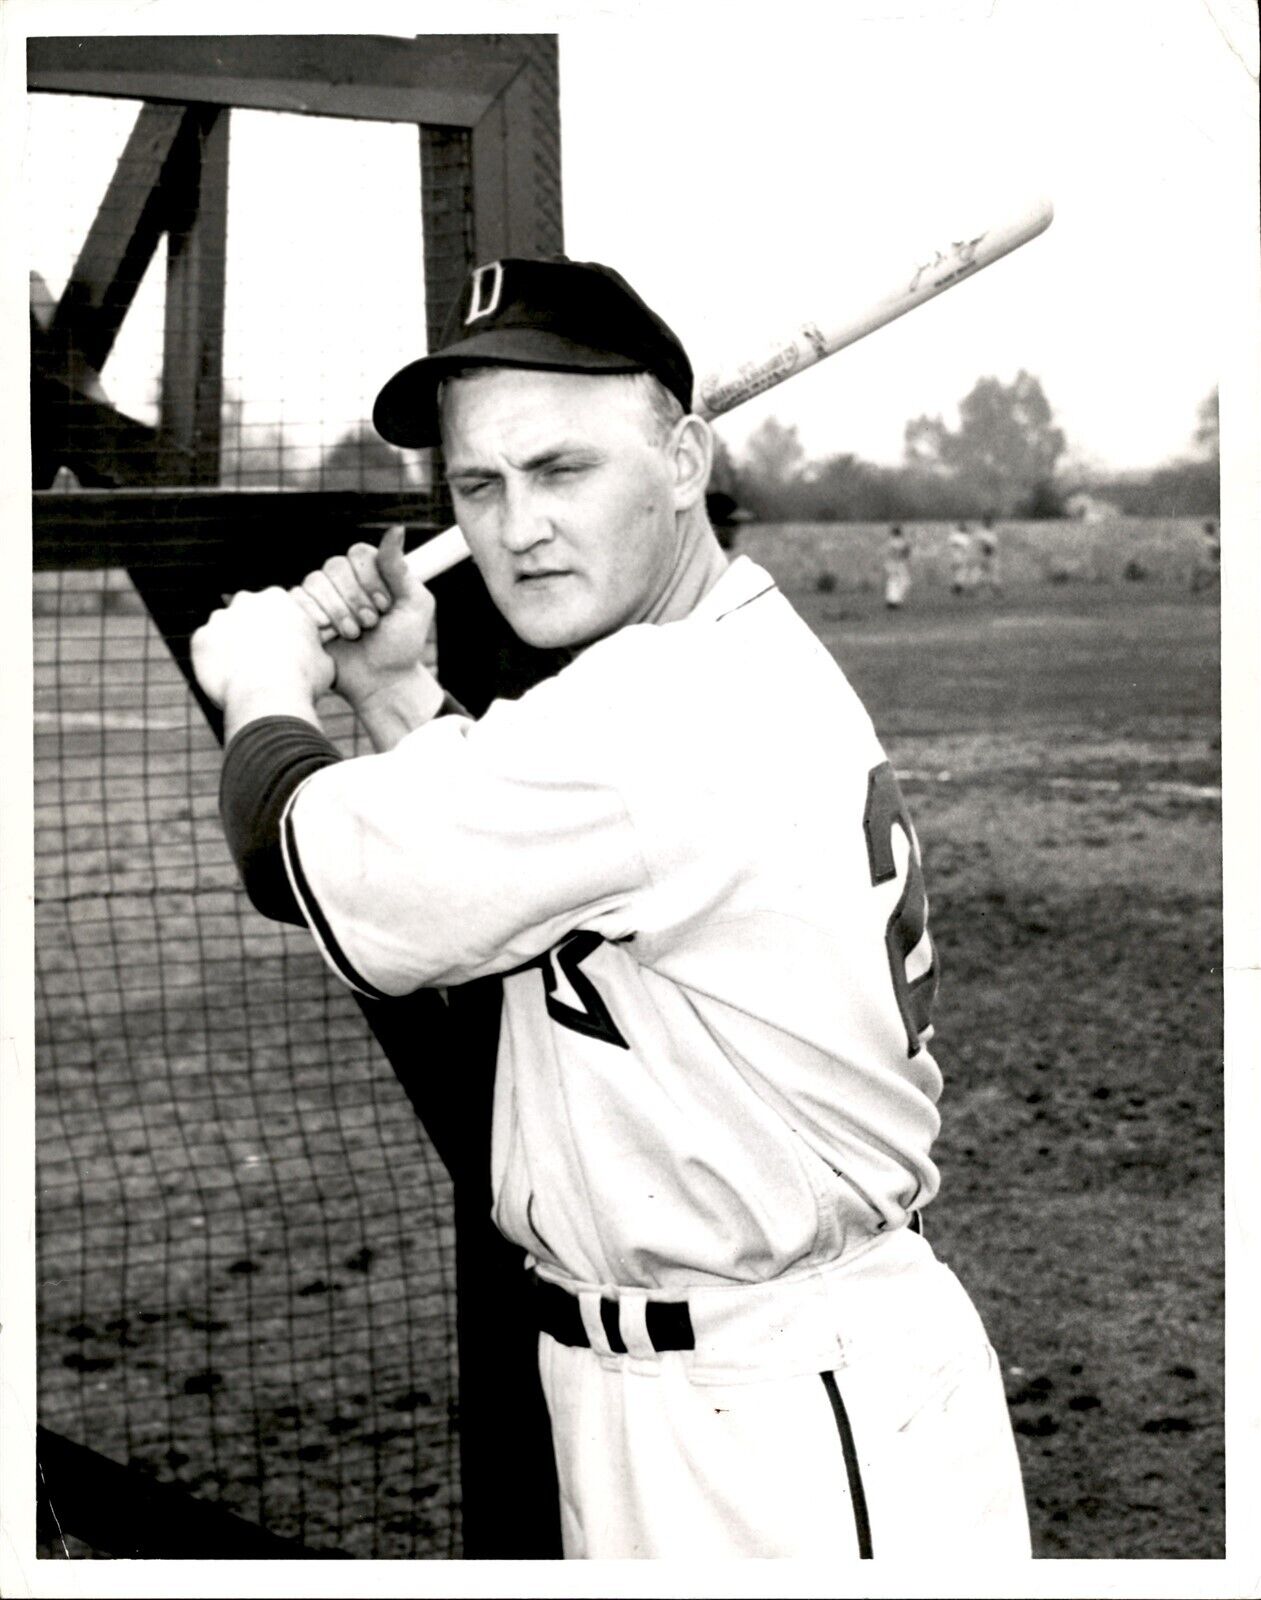 LG17 Original Frank Worth Photo JOE KING Classic Baseball Athlete Old Narrow Bat